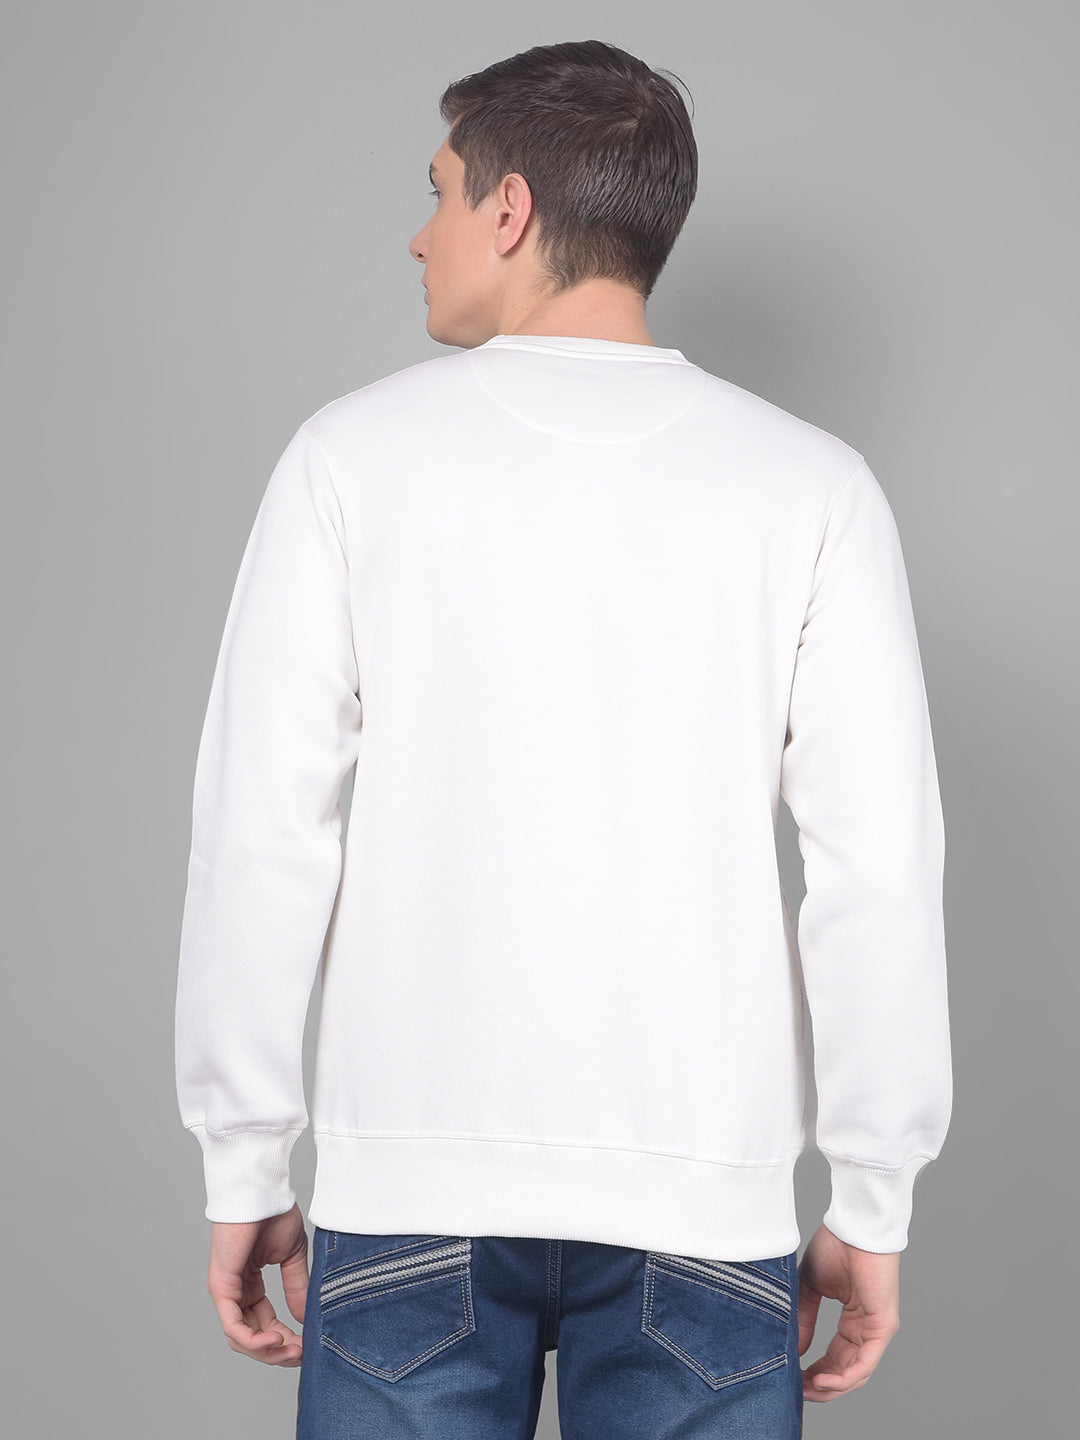 cobb off white printed round neck sweatshirt